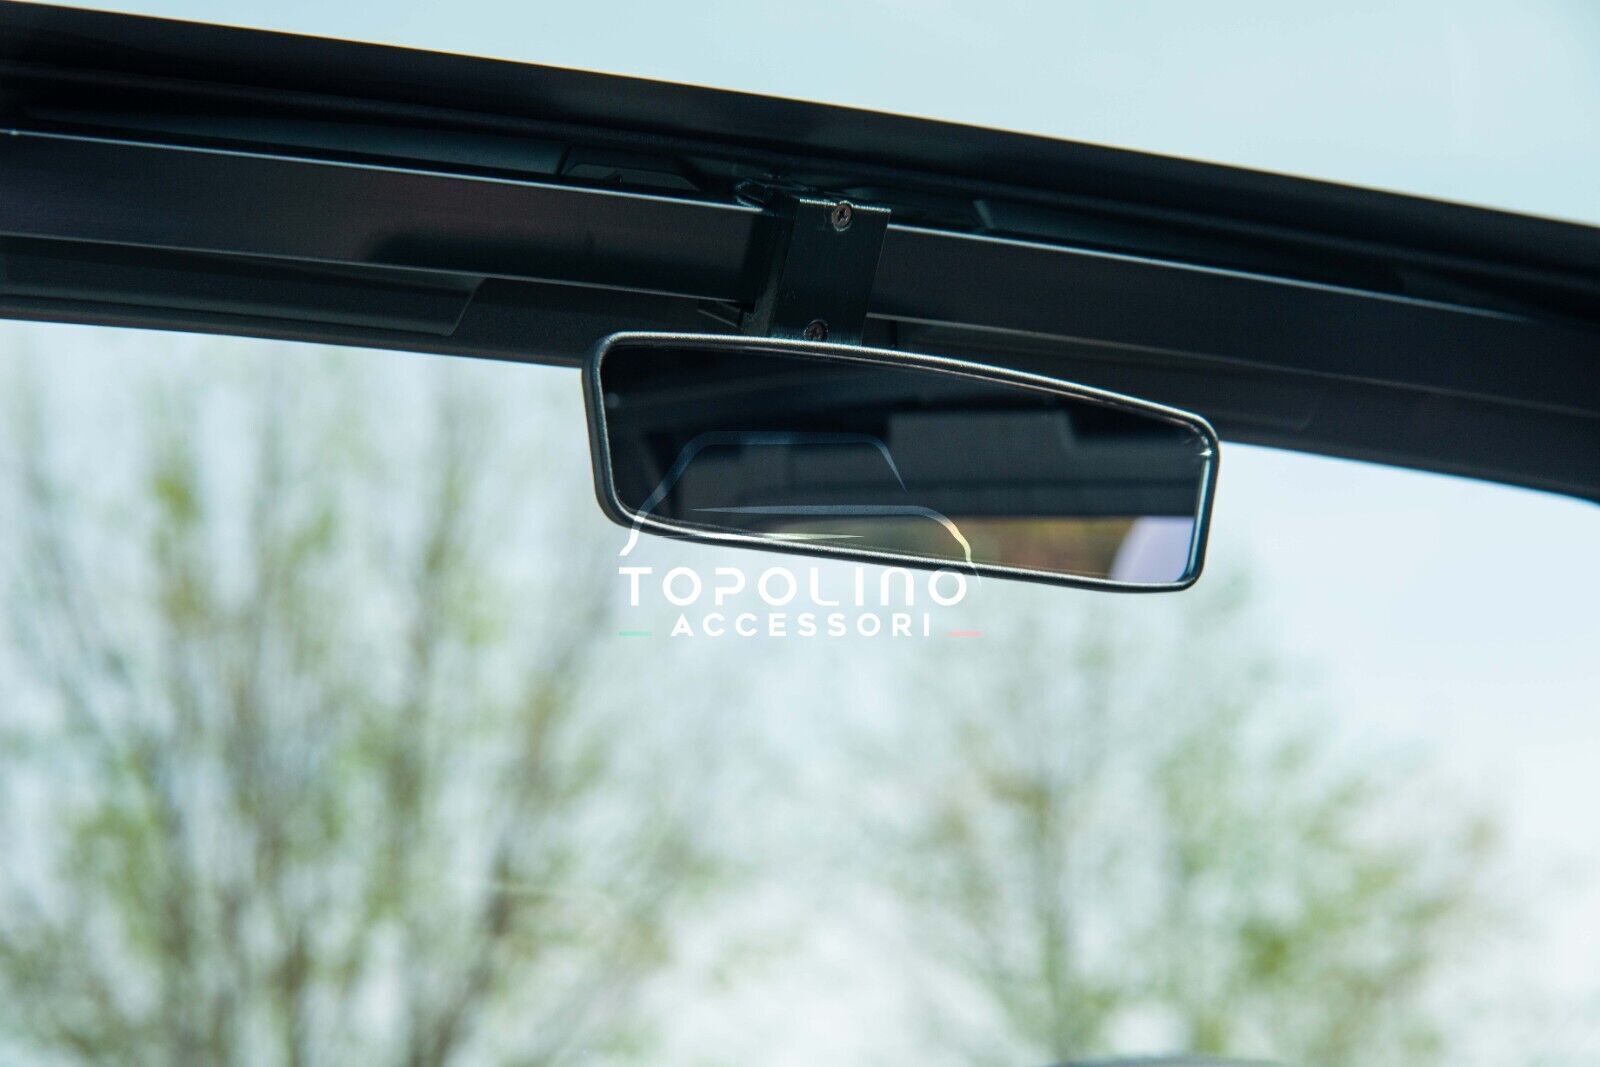 Rearview Mirror KIT for Topolino and DolceVita - Fiat Topolino Accessories